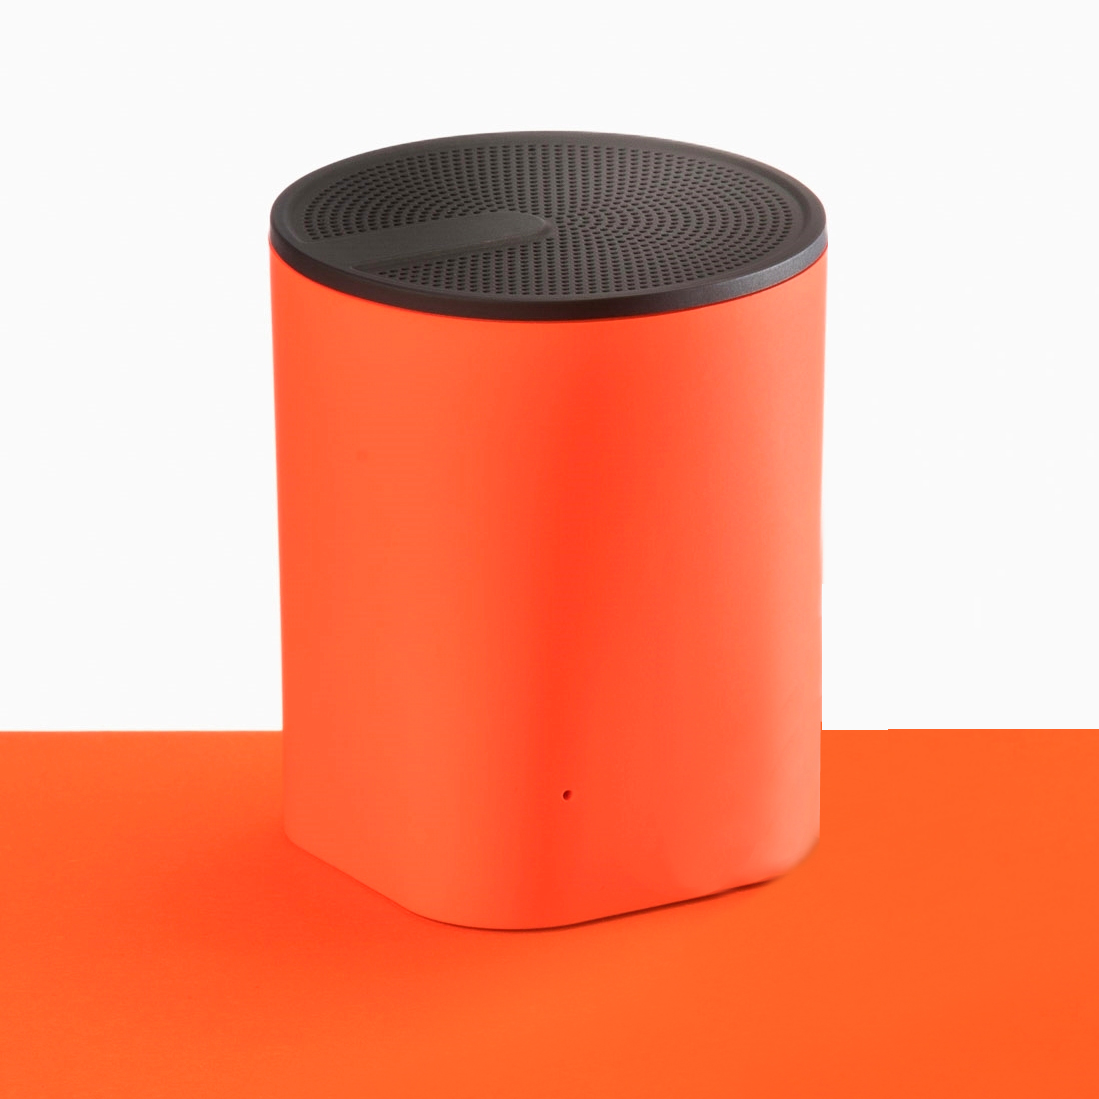 Orange Colour Sound Compact Speaker